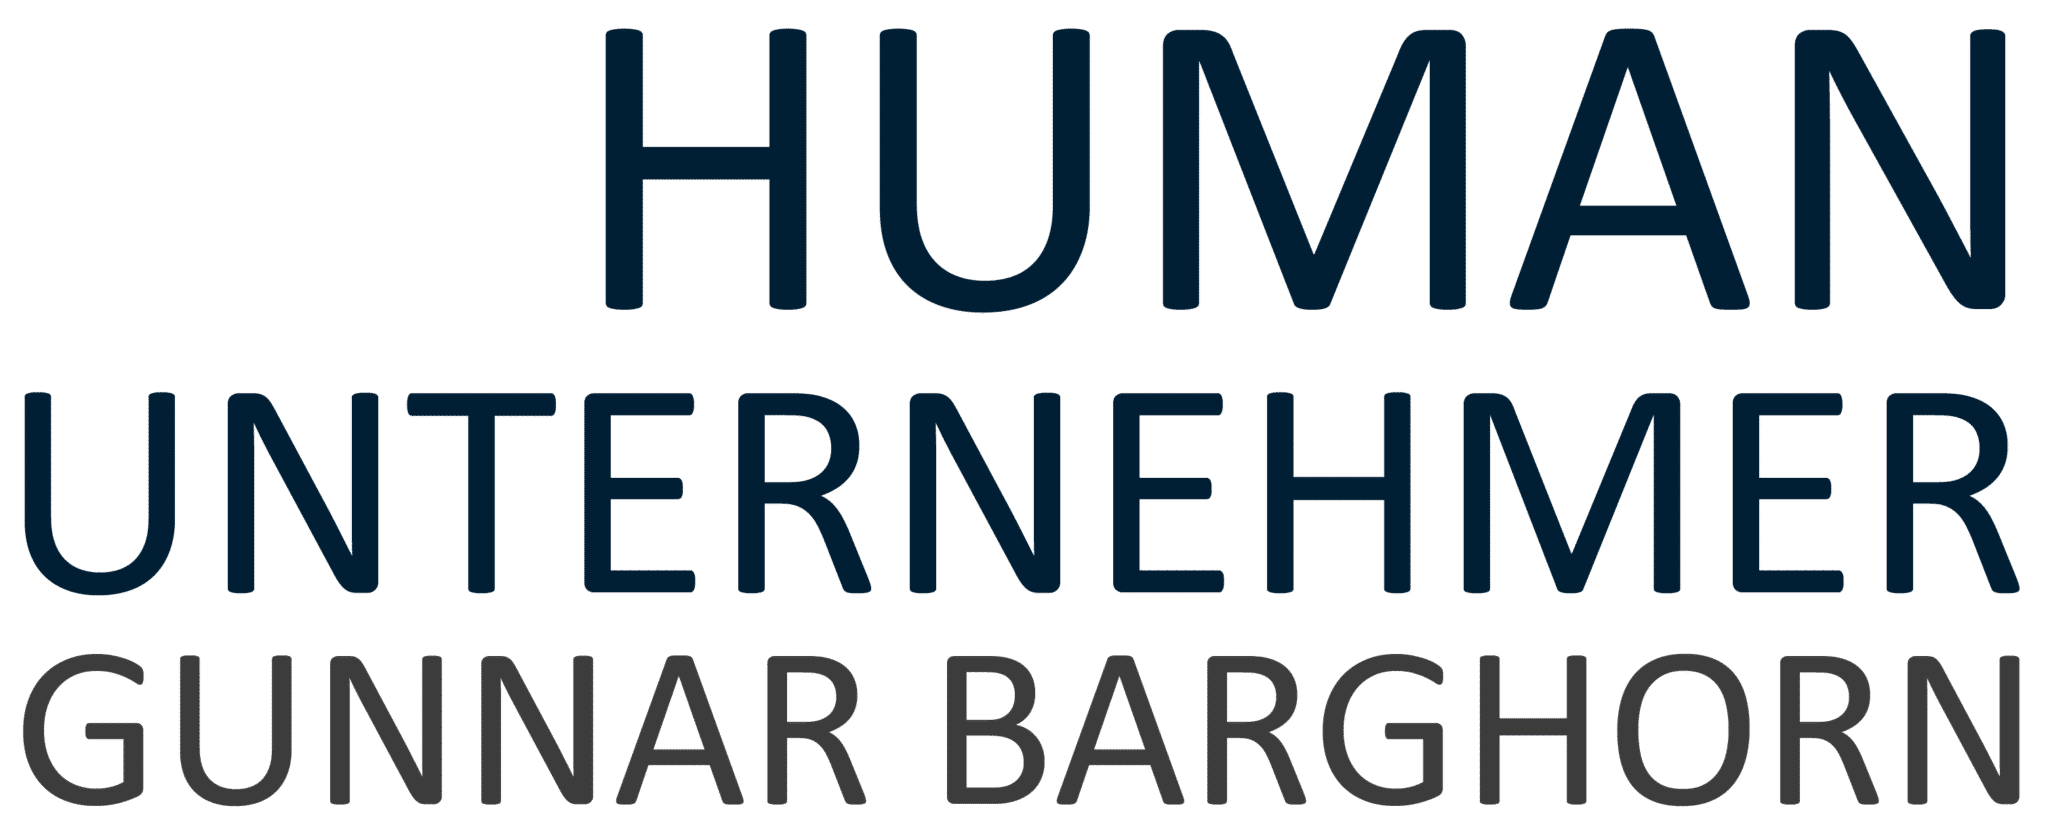 Humanunternehmer - Gunnar Barghorn